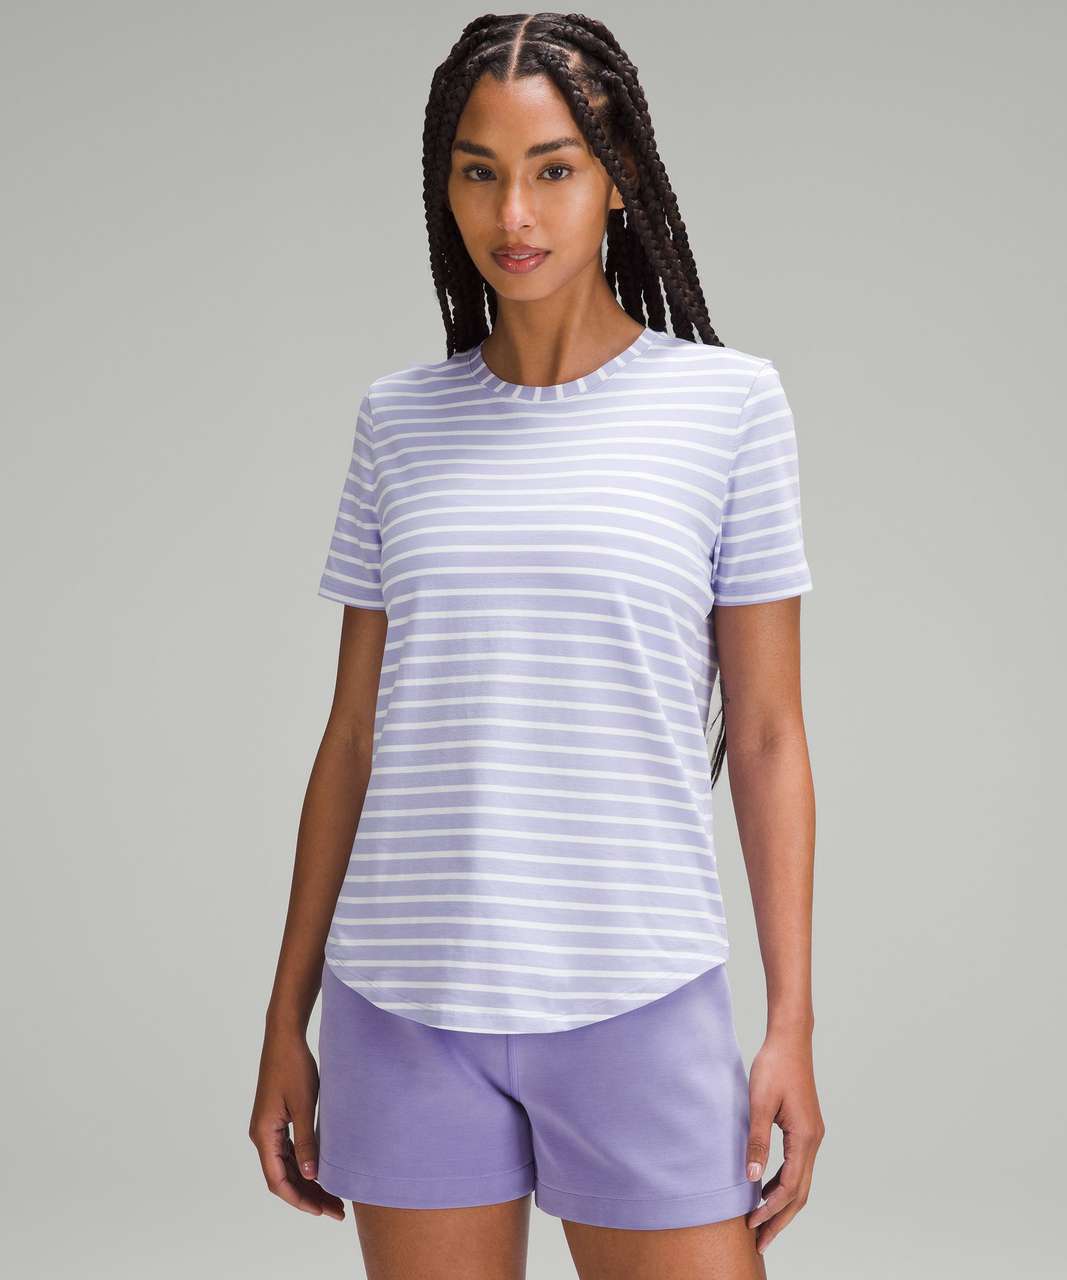 Lululemon Love Crewneck T-Shirt - Yachtie Stripe Lilac Smoke White